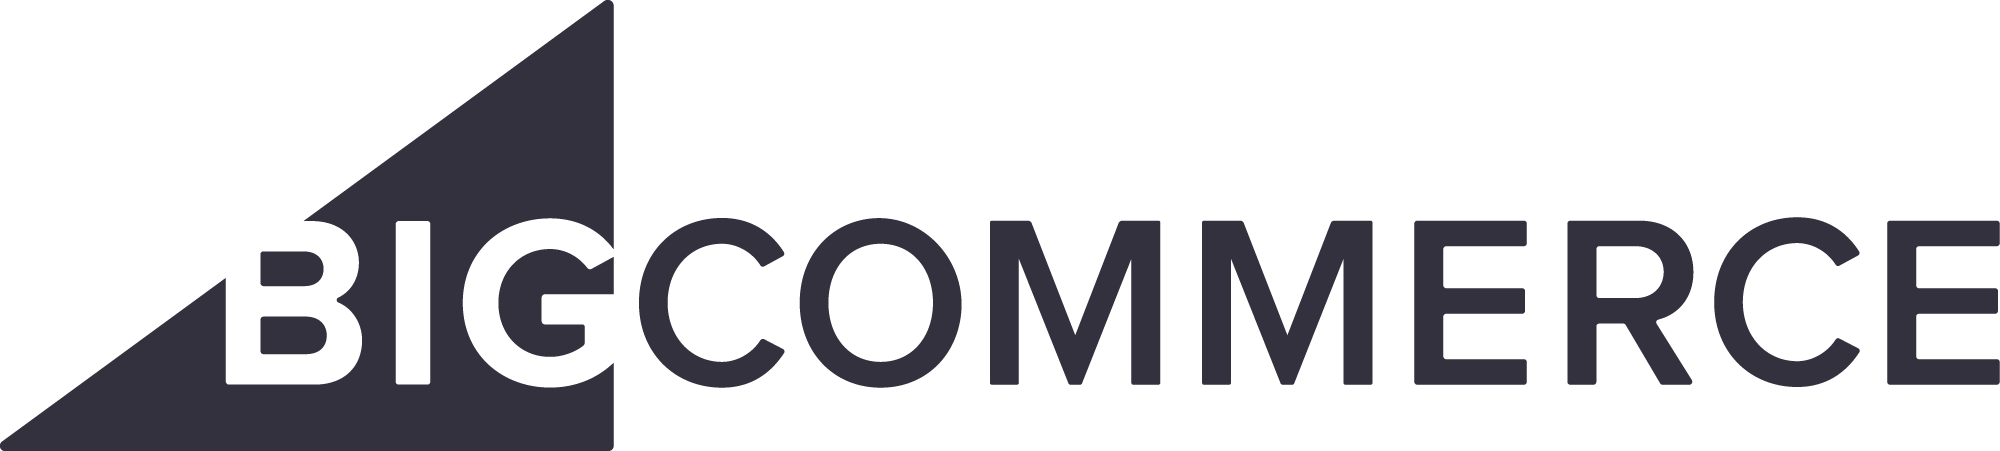 BigCommerce logo ecommerce shipping integrations